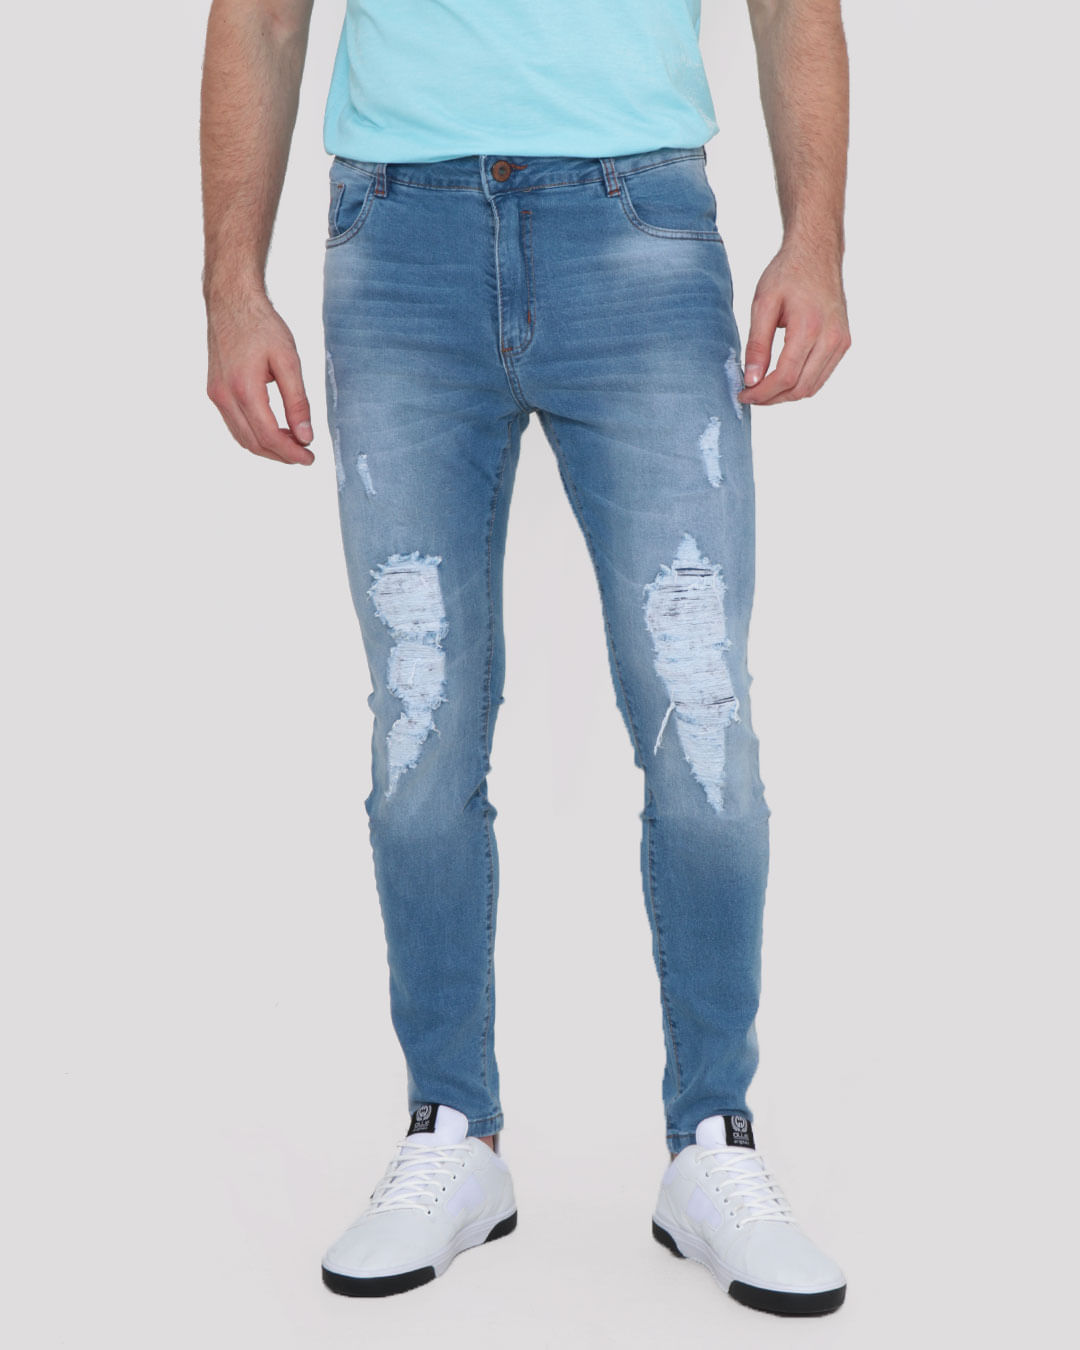 23121000947045-blue-jeans-medio-1